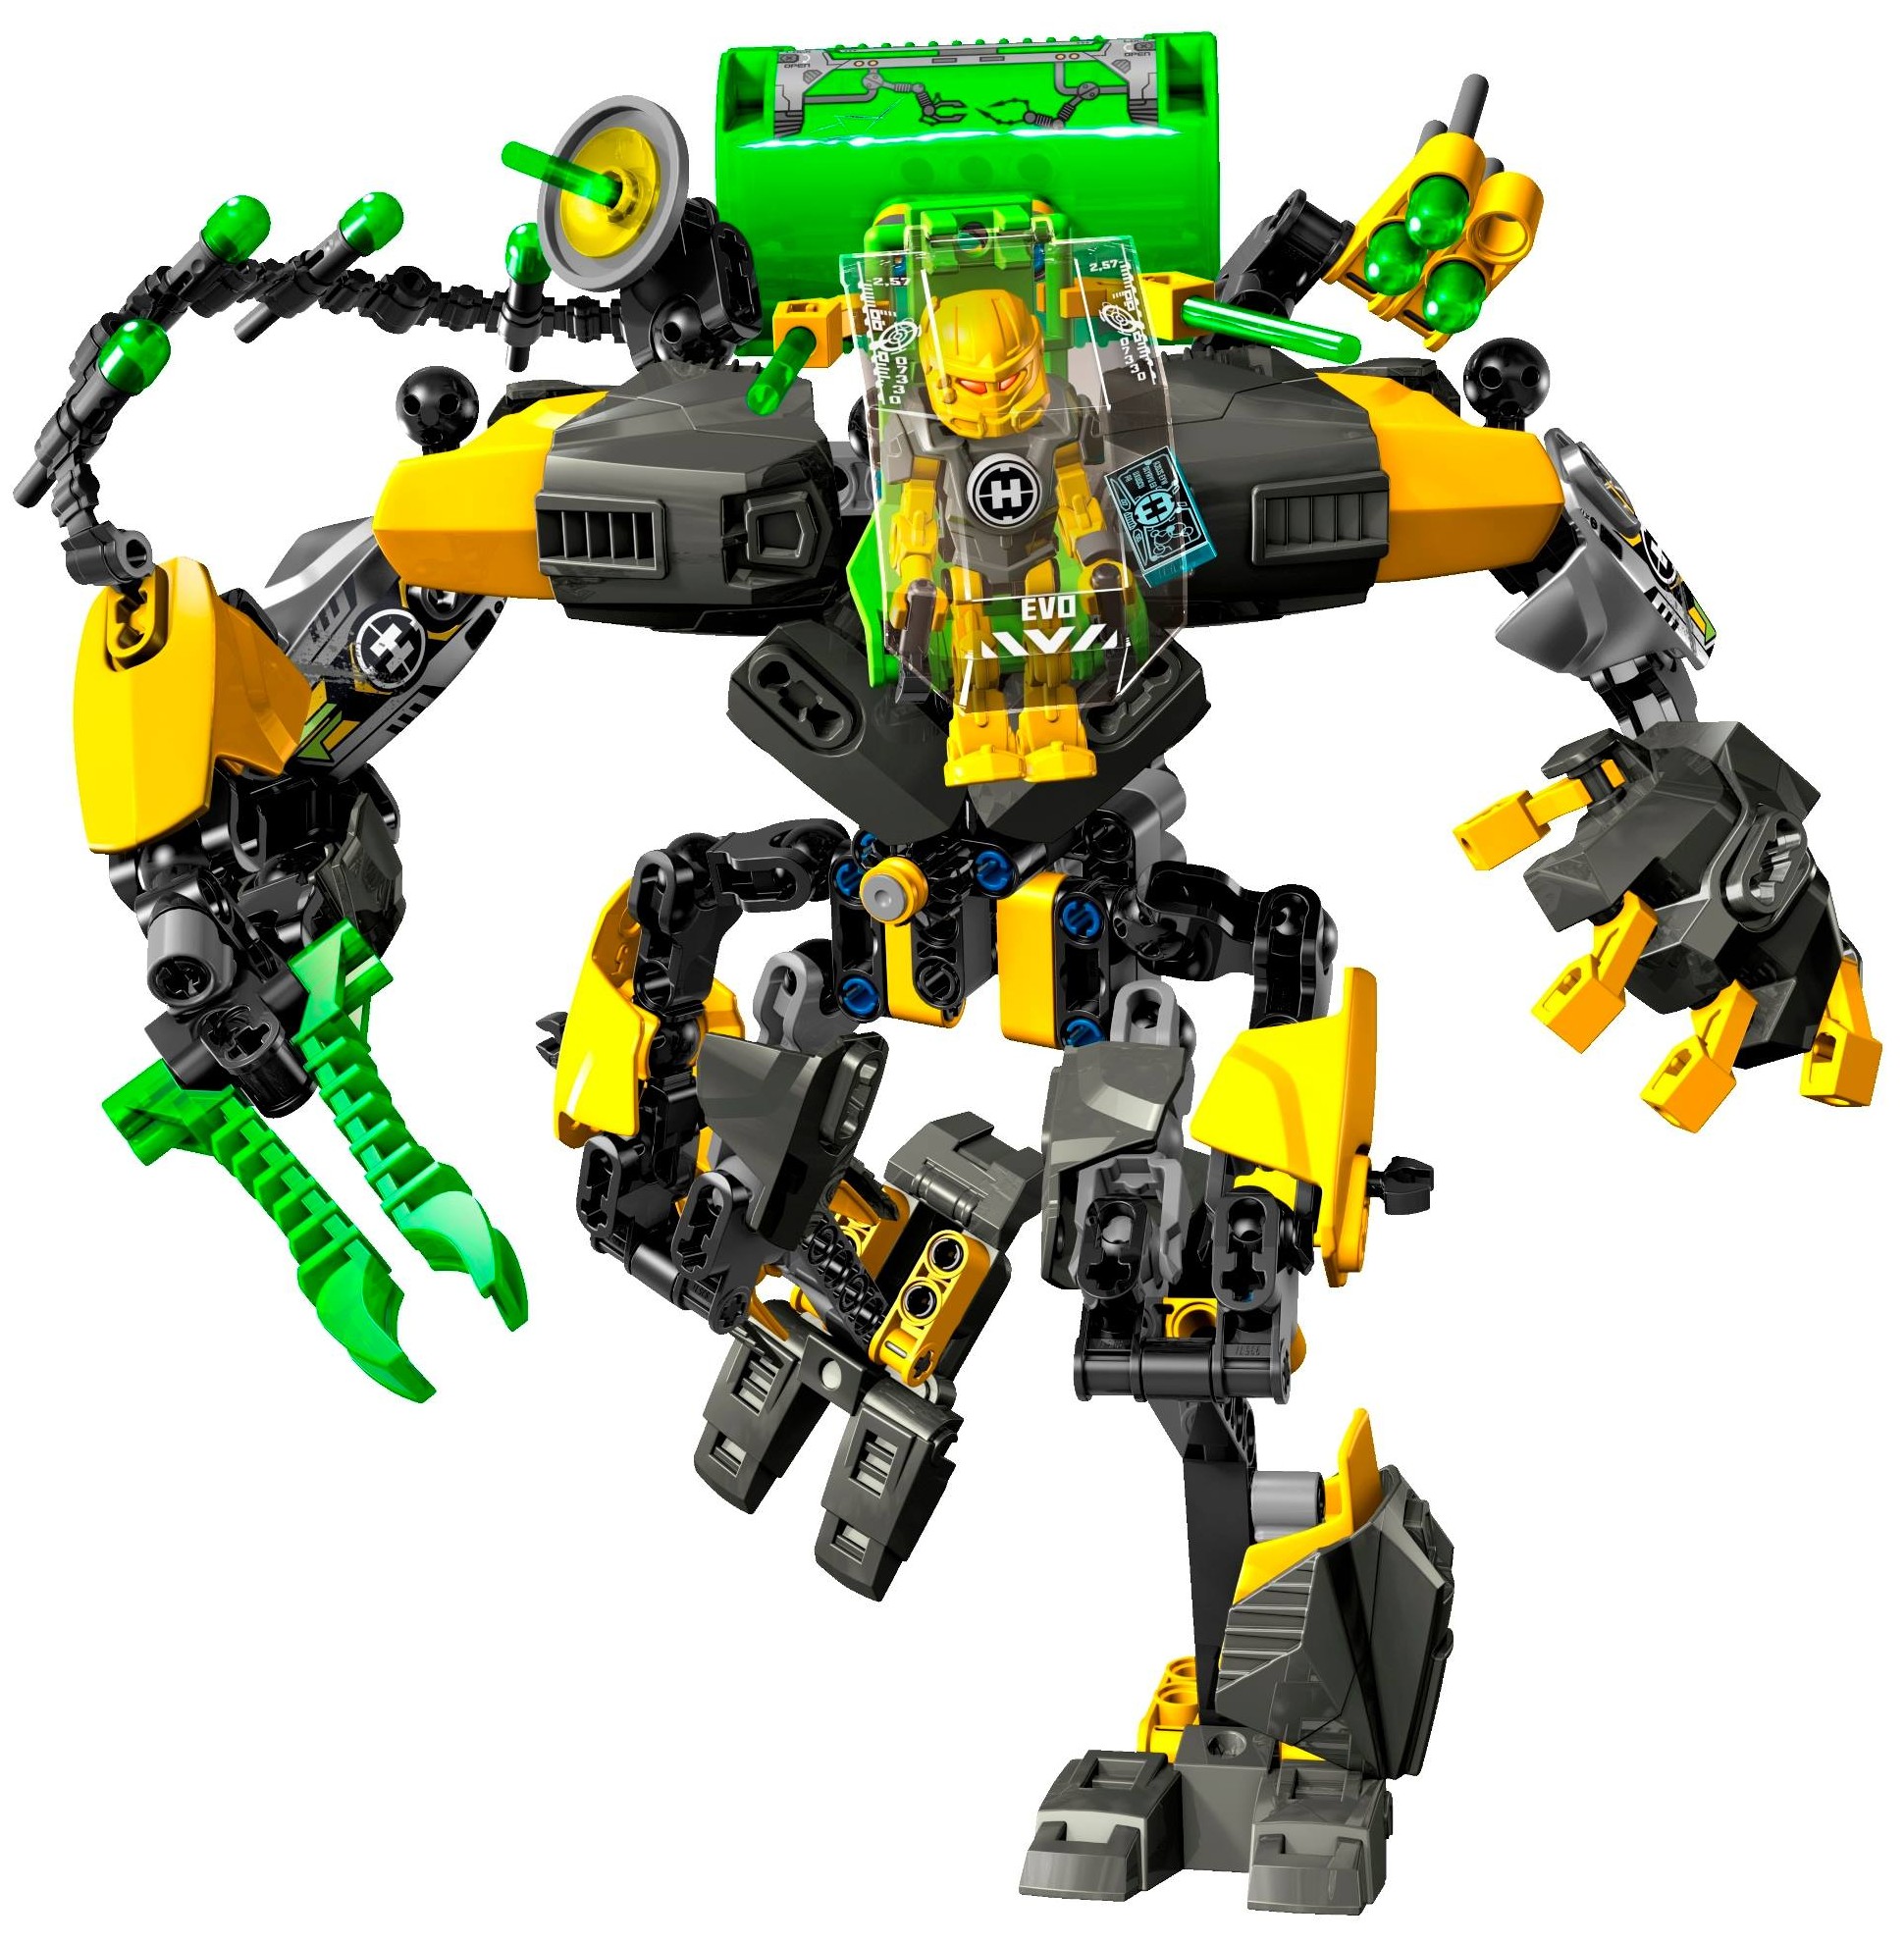 LEGO 2014 Hero Factory Sets List & Photos Revealed! - Bricks and Bloks